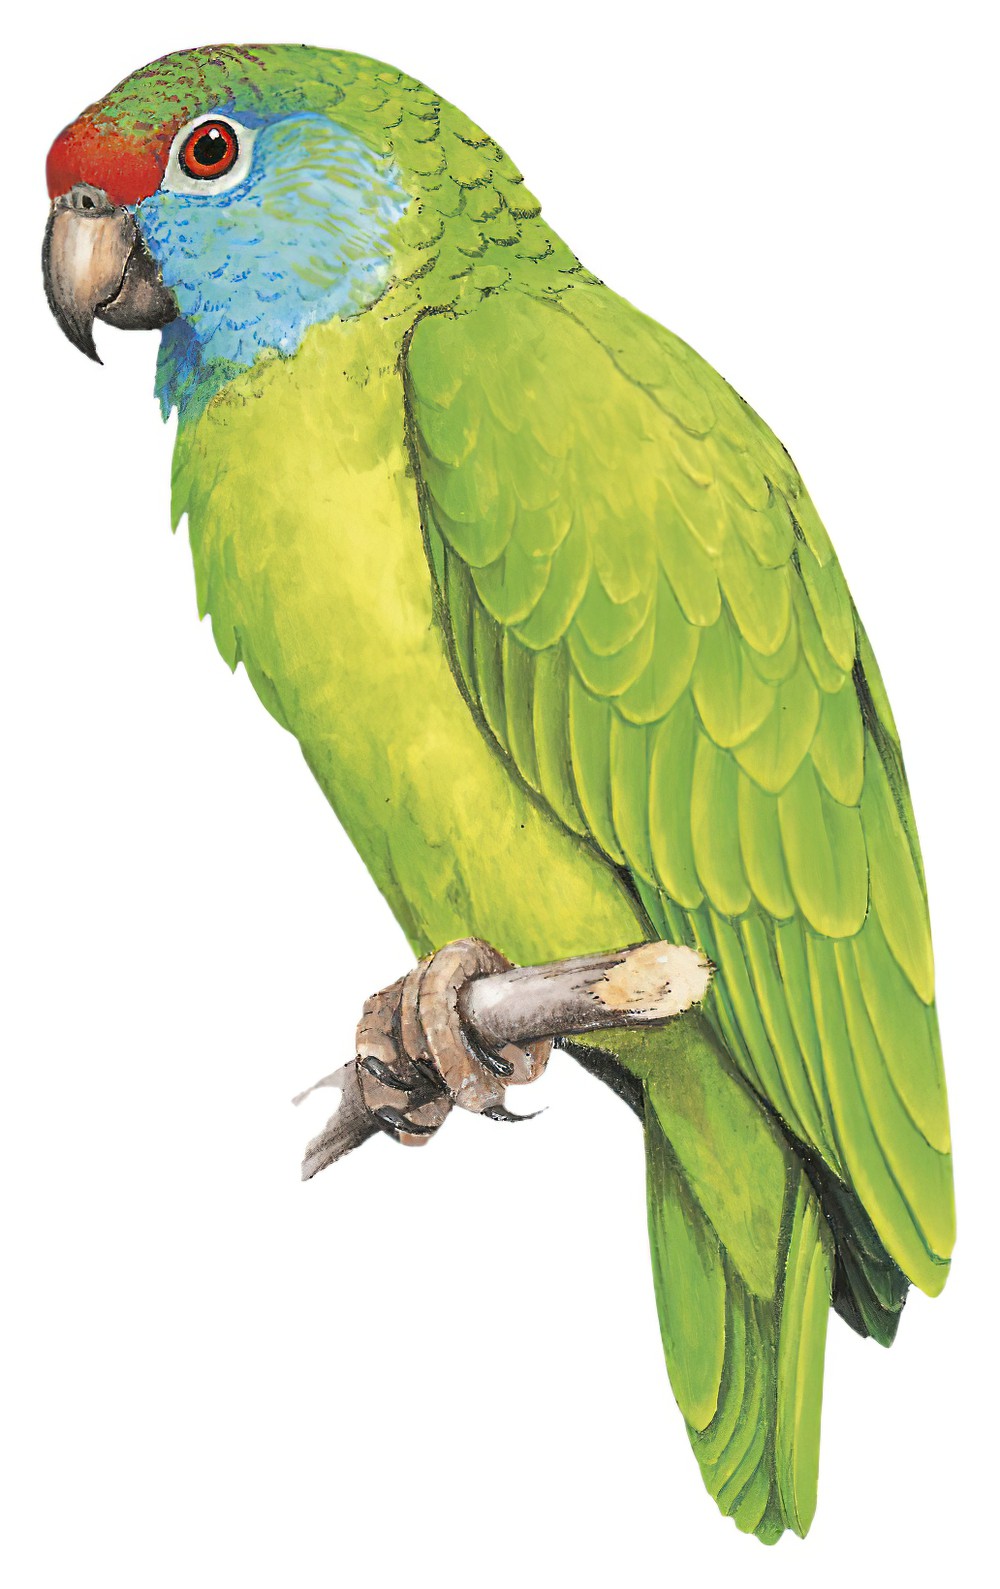 Festive Parrot / Amazona festiva